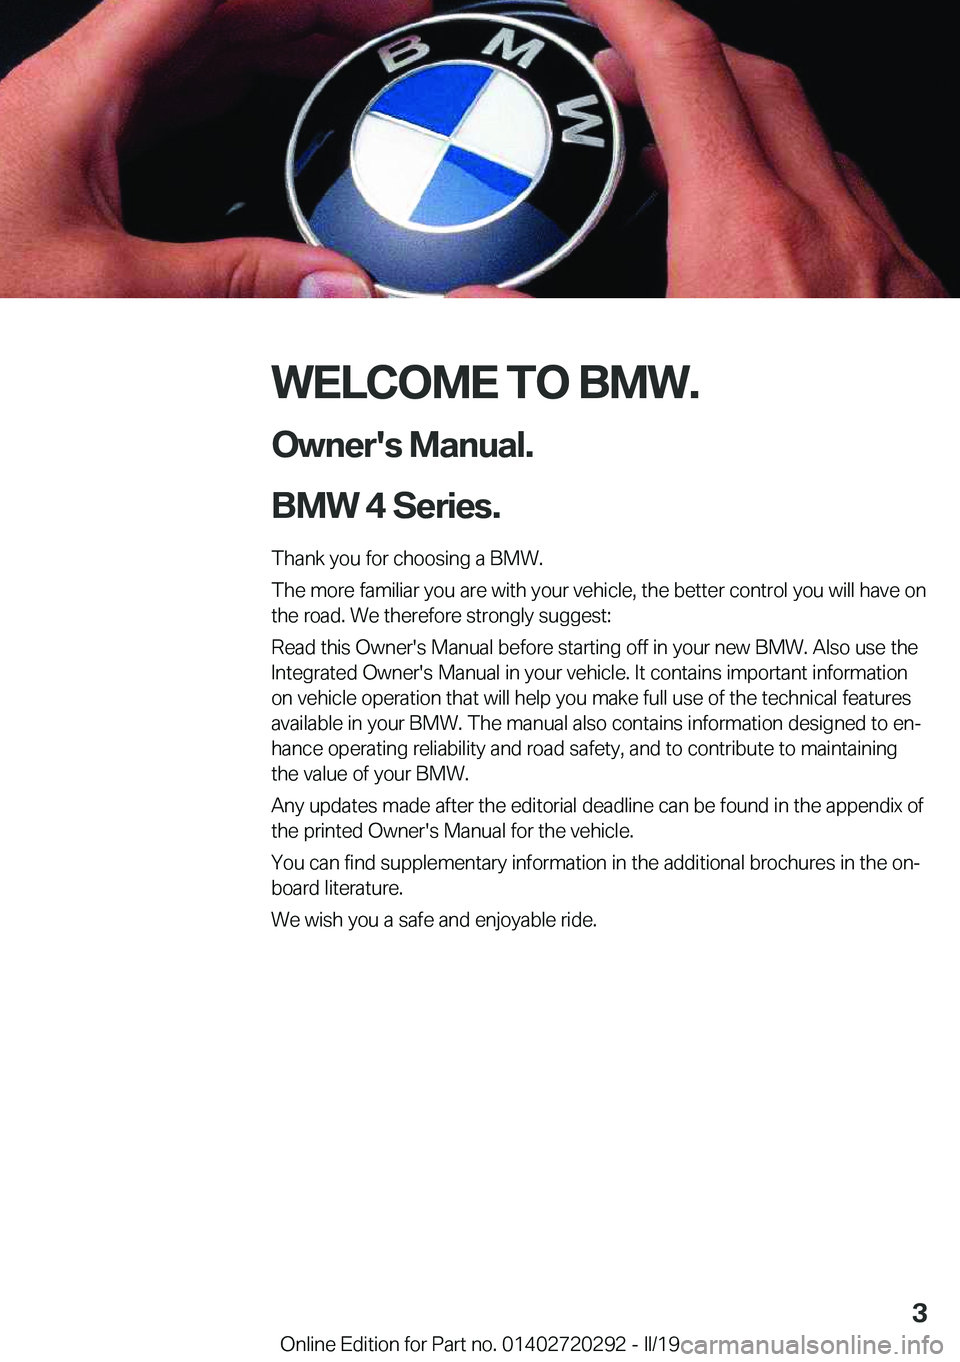 BMW 4 SERIES COUPE 2020  Owners Manual �W�E�L�C�O�M�E��T�O��B�M�W�.�O�w�n�e�r�'�s��M�a�n�u�a�l�.
�B�M�W��4��S�e�r�i�e�s�.�
�T�h�a�n�k��y�o�u��f�o�r��c�h�o�o�s�i�n�g��a��B�M�W�.
�T�h�e��m�o�r�e��f�a�m�i�l�i�a�r��y�o�u��a�